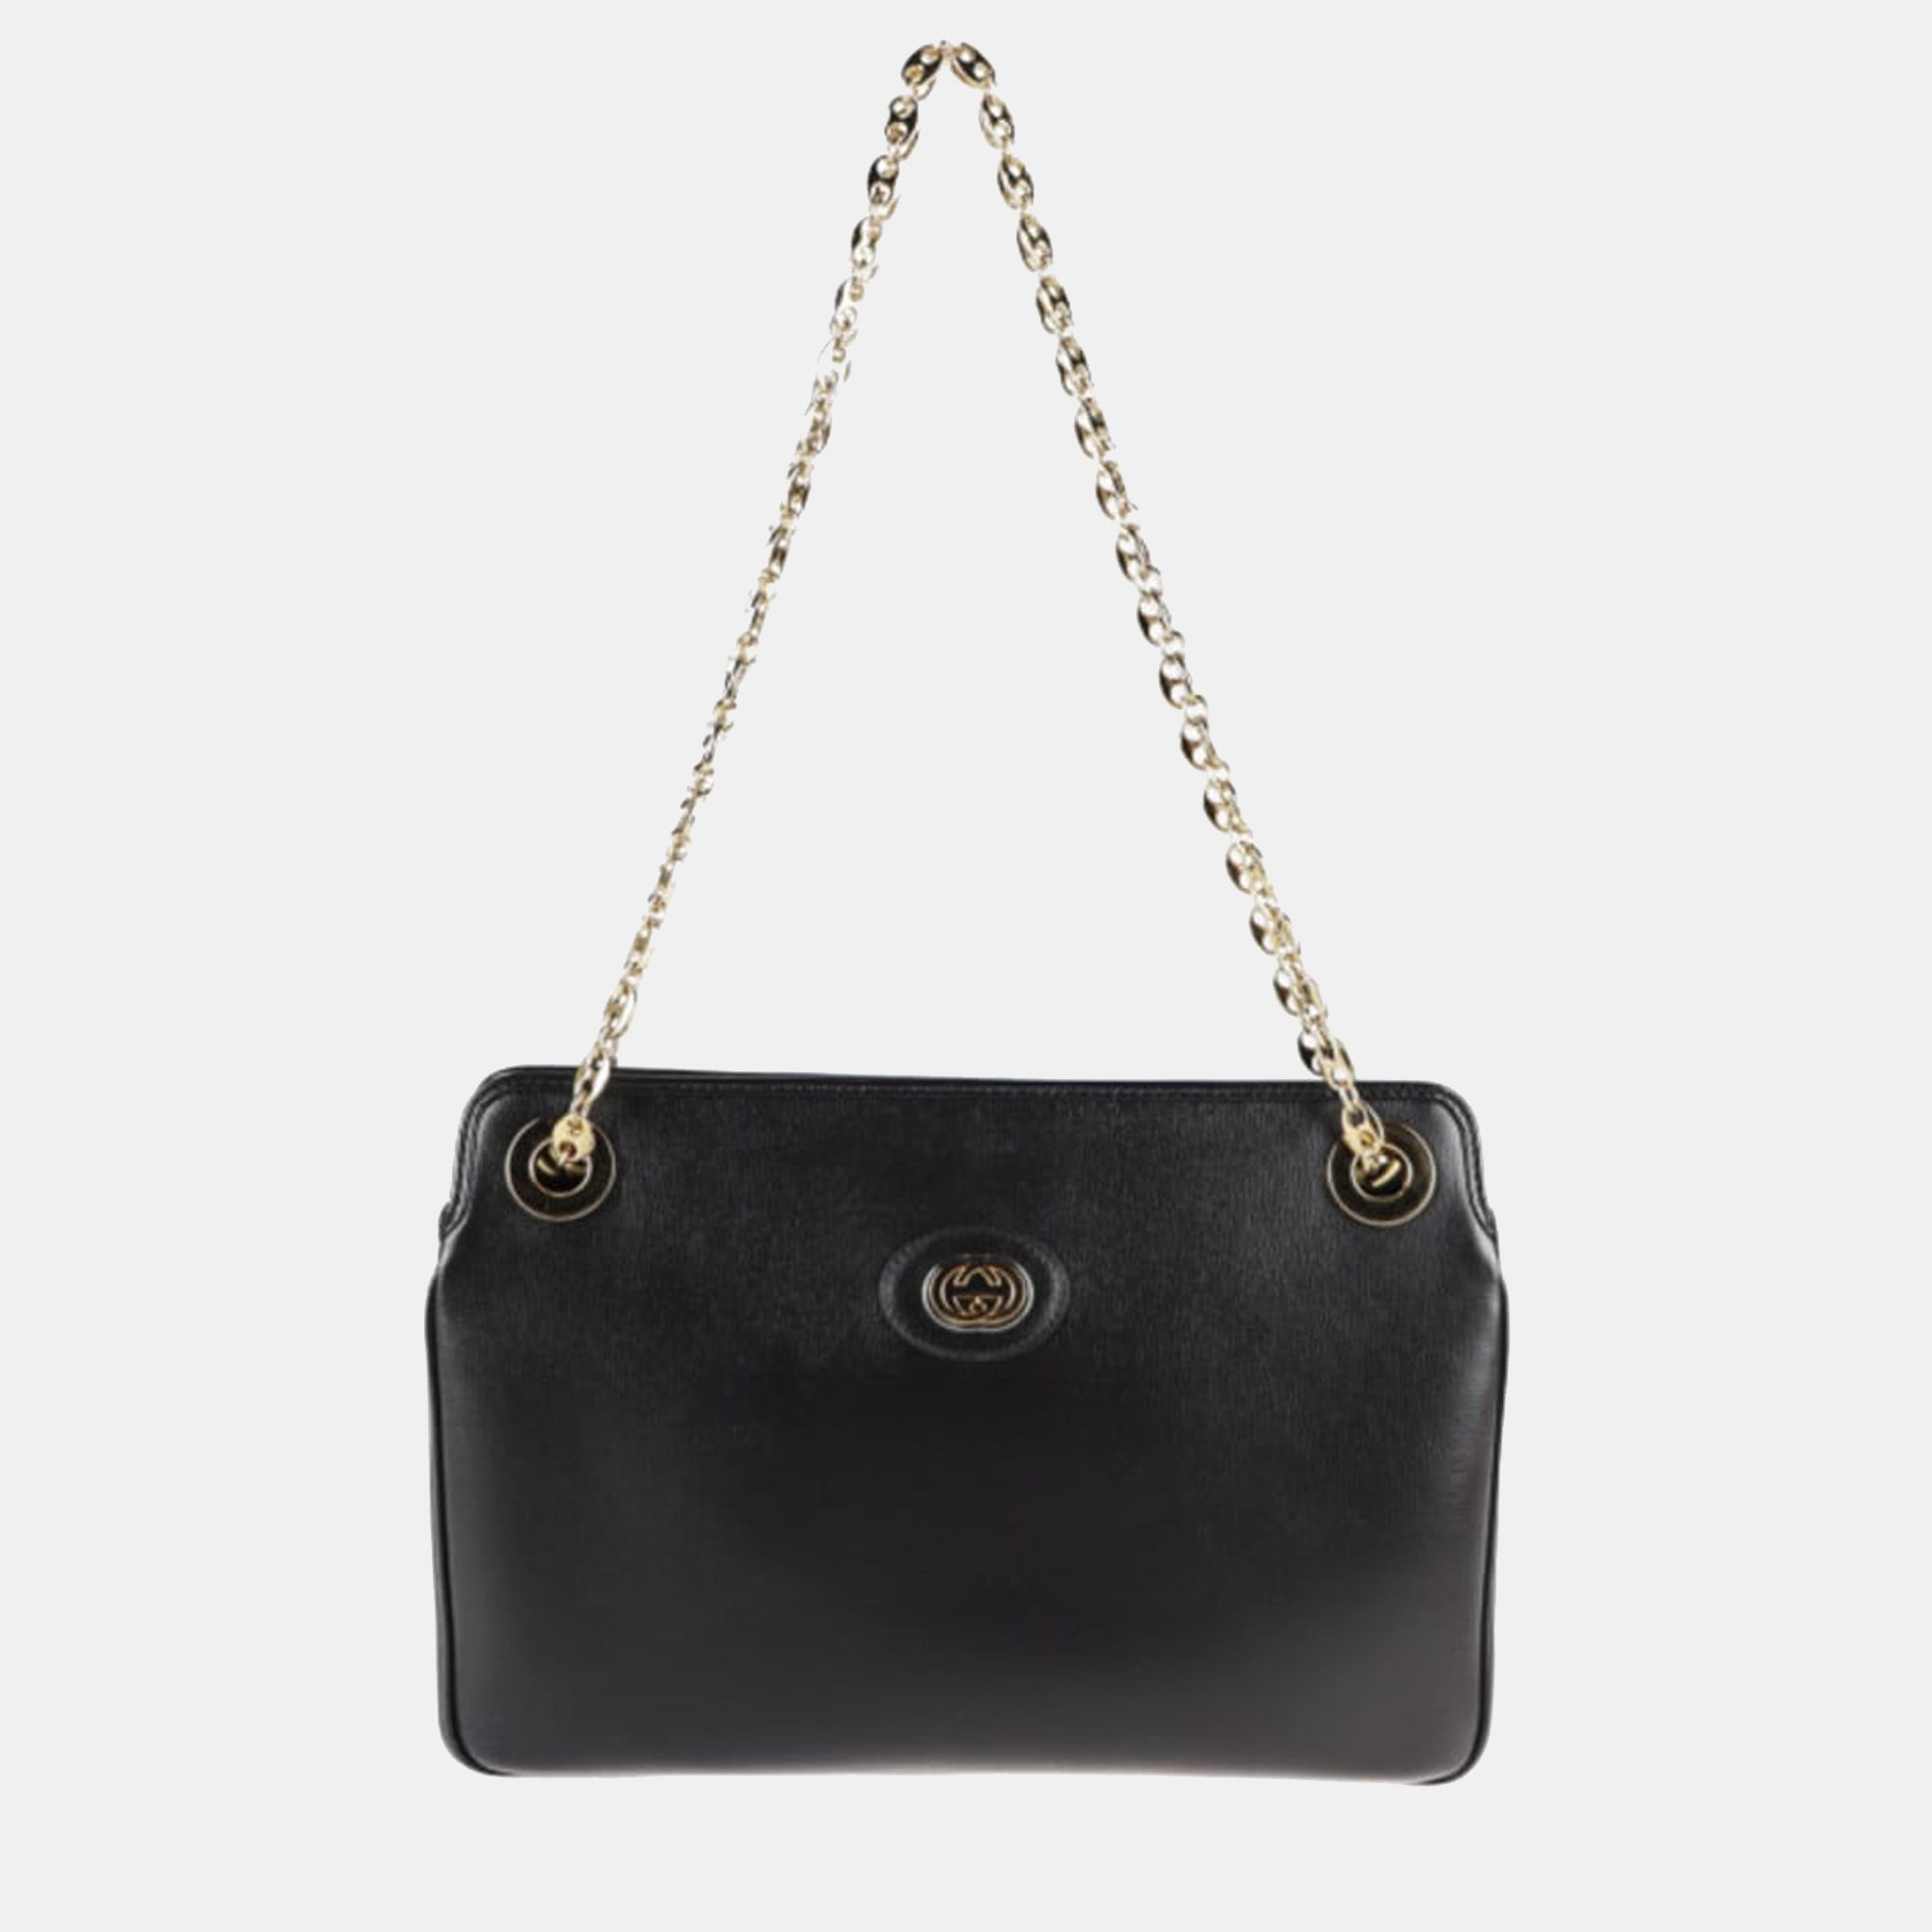 Gucci black leather linea marina chain shoulder tote bag